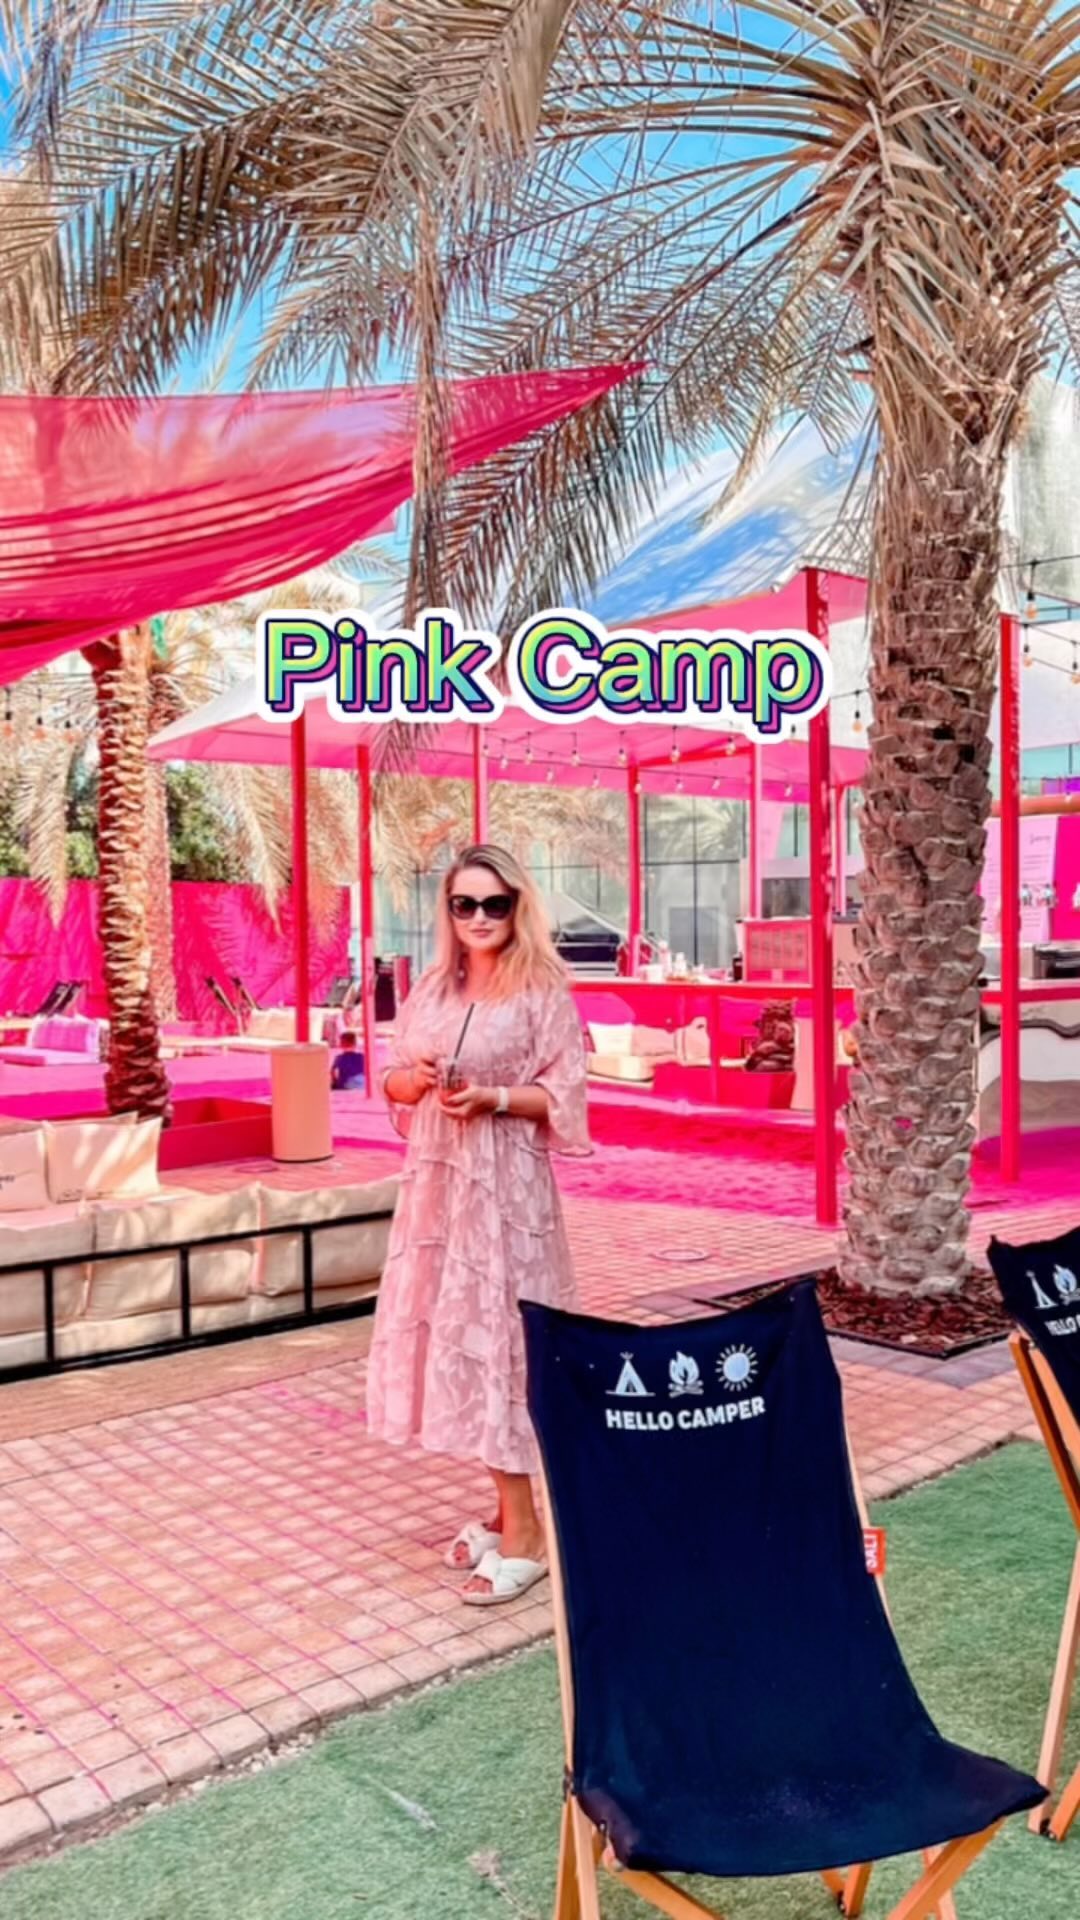 Why cant the desert be pink? 💖 

You can find pink sand at Salt Camp 🤩
.
„To all grown-ups who were children first”- St Exupery
This camp is dedicated to you 😍
.
.
Do you like it?? 
. 
.

#thinkpink🎀 #ilikepink #princessdress #weloveemirates #findsalt #pinkdesert #manaratalsaadiyat #gogogirls #kobiecafotoszkoła #motherhood #bloggerlifephotos #travelphotography  #visitabudhabi #lovingabudhabi #polskiedziewczyny #matkafotografka #wearetravelgirls #okiemmamy #whatsondubai #pinkcolor #polkinaobczyznie #polkiwpodrozy #polkawemiratach #matkablogerka #zwiedzamy #abudhabiart #findsaltcamp #zjednoczoneemiratyarabskie